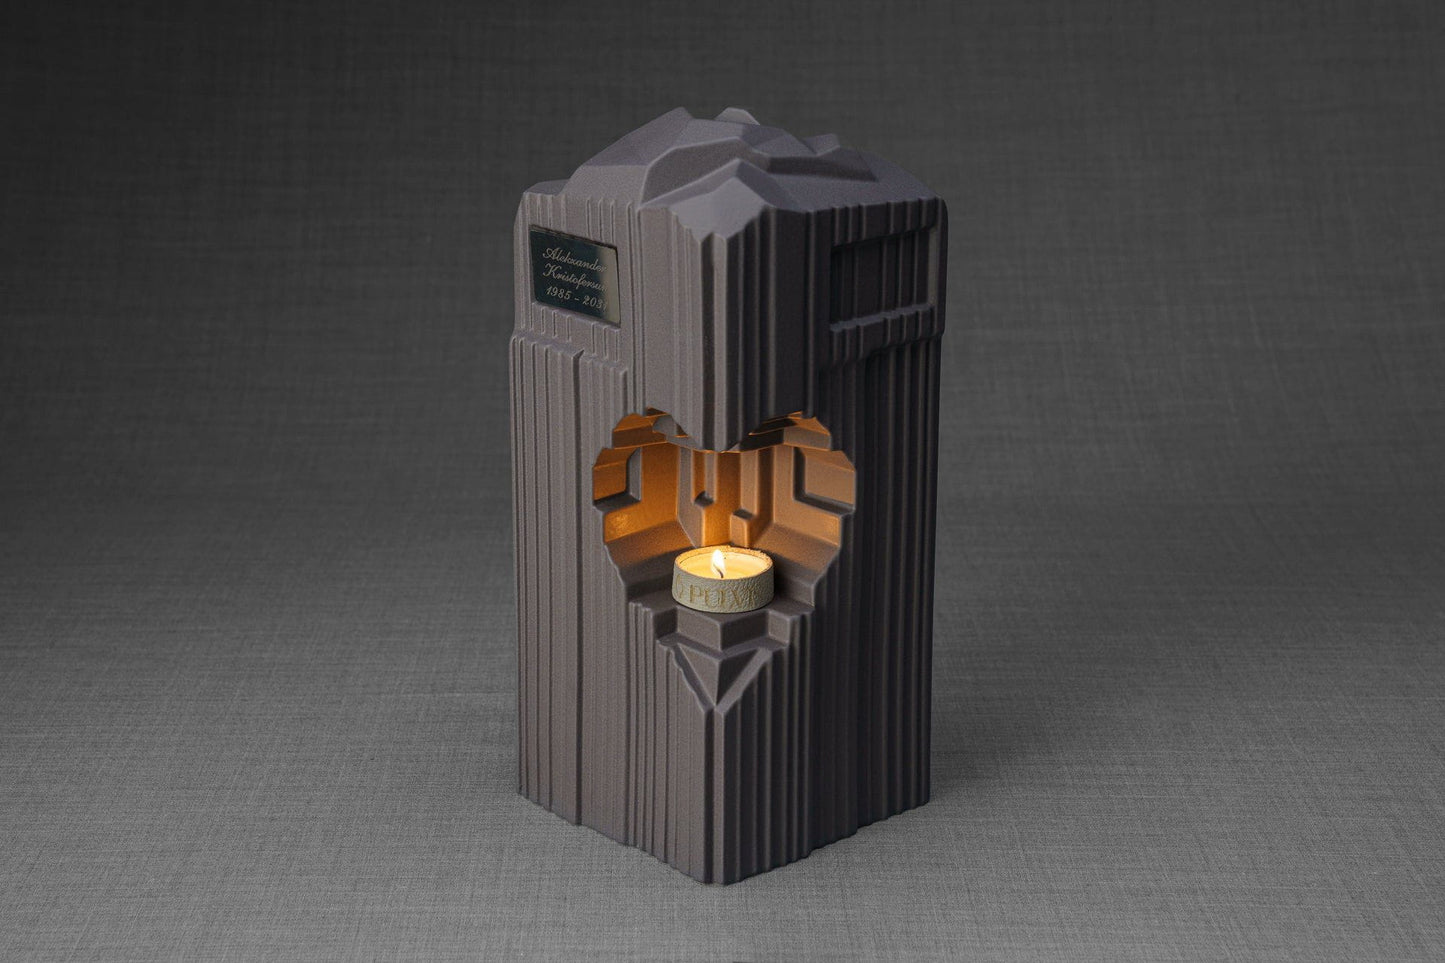 Pulvis Art Urns Adult Size Urn Cremation Candle Urn for Ashes "Heart" - Large | Grey Matte | Ceramic